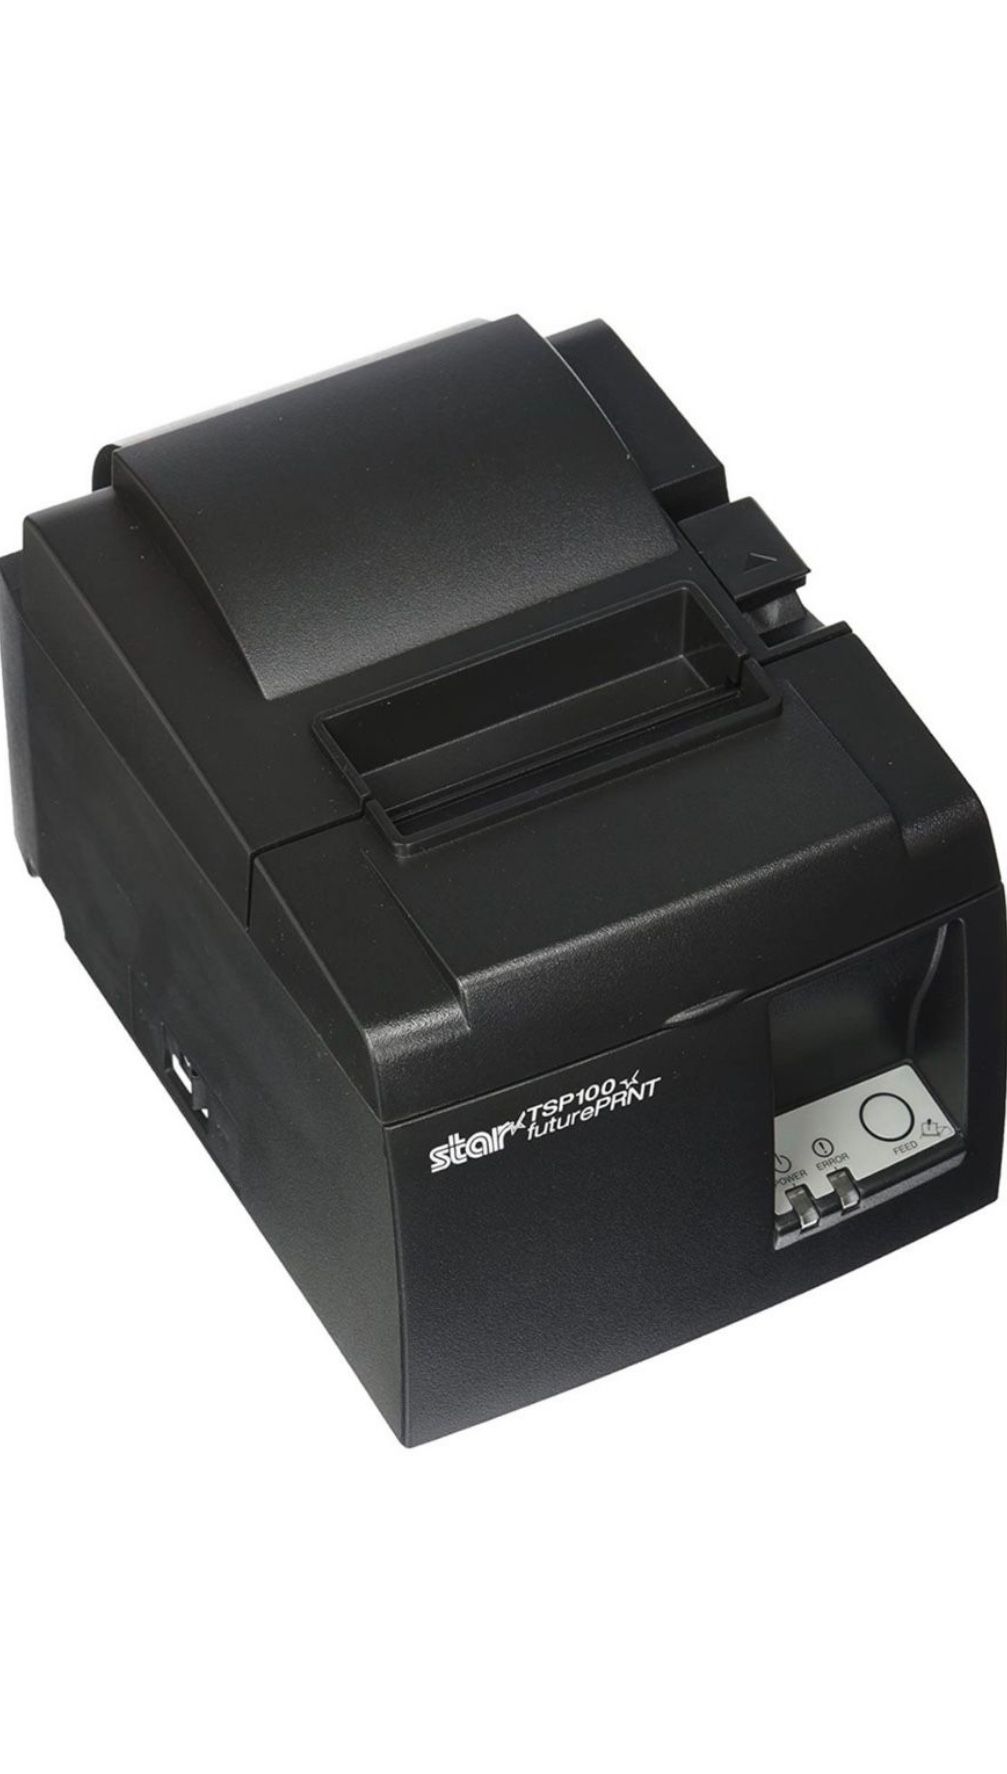 Star TSP 100 Bluetooth Printer 